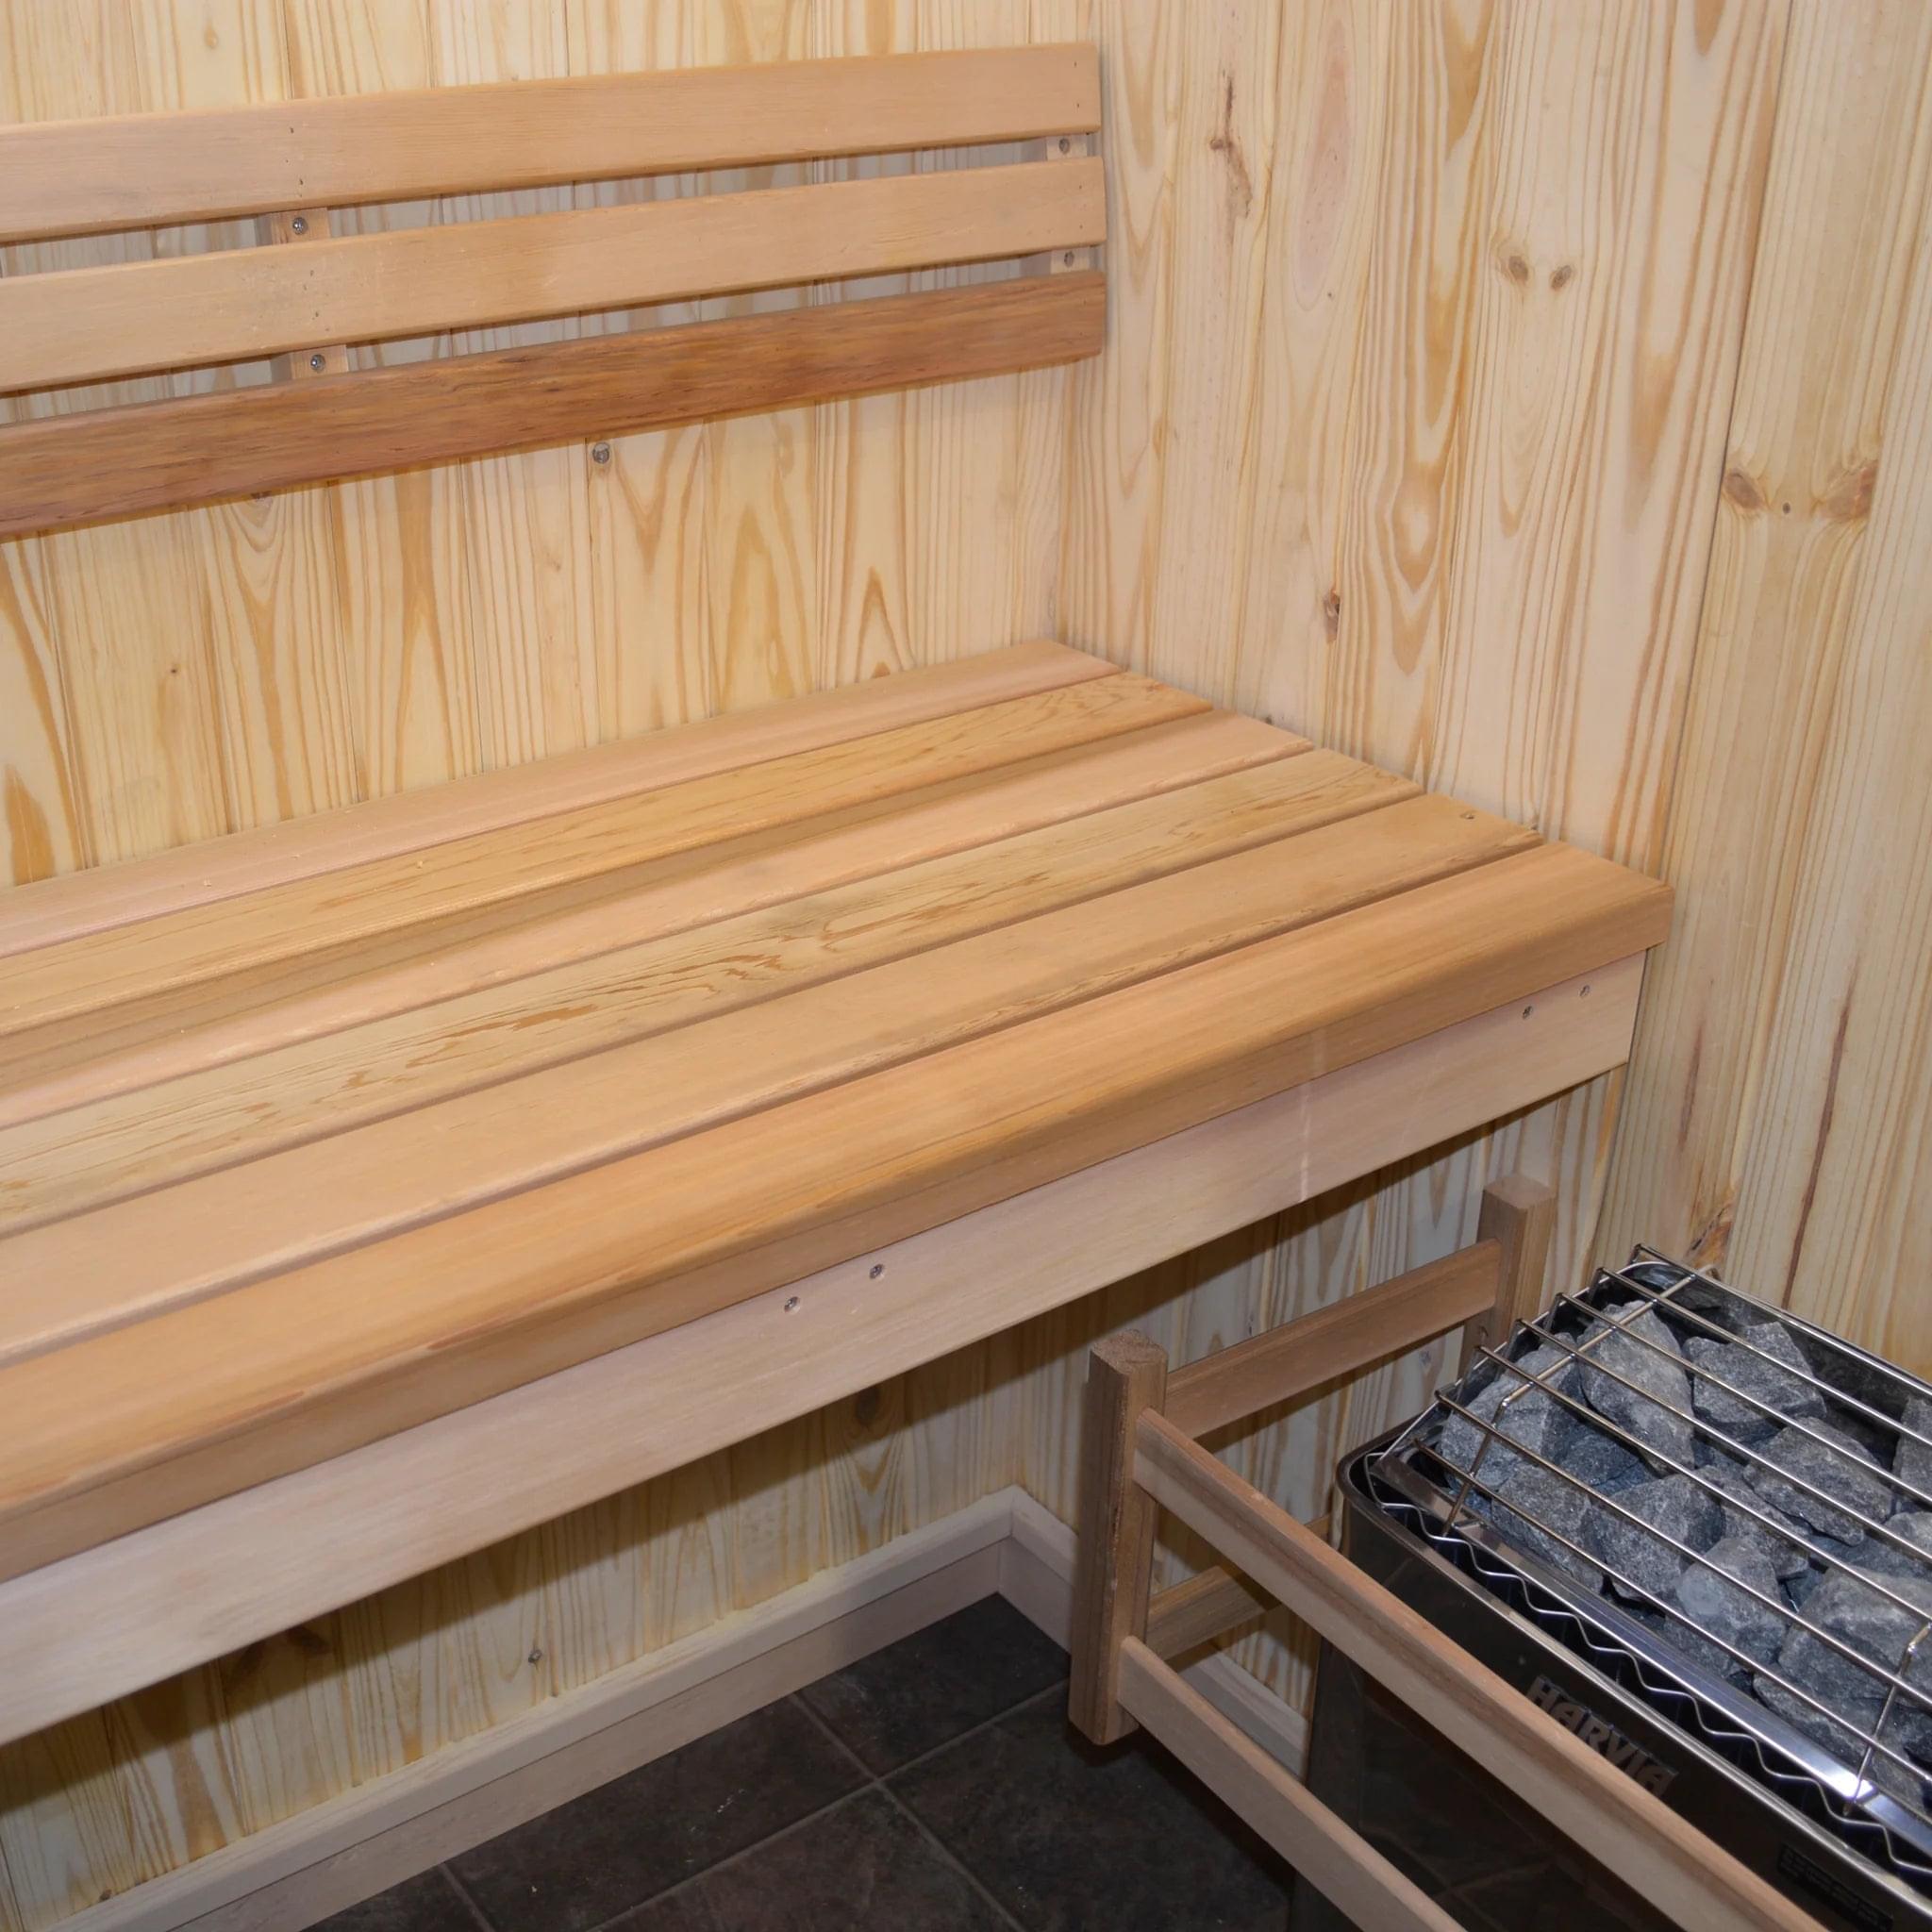 Almost Heaven Grayson 4-Person Customizable Indoor Sauna